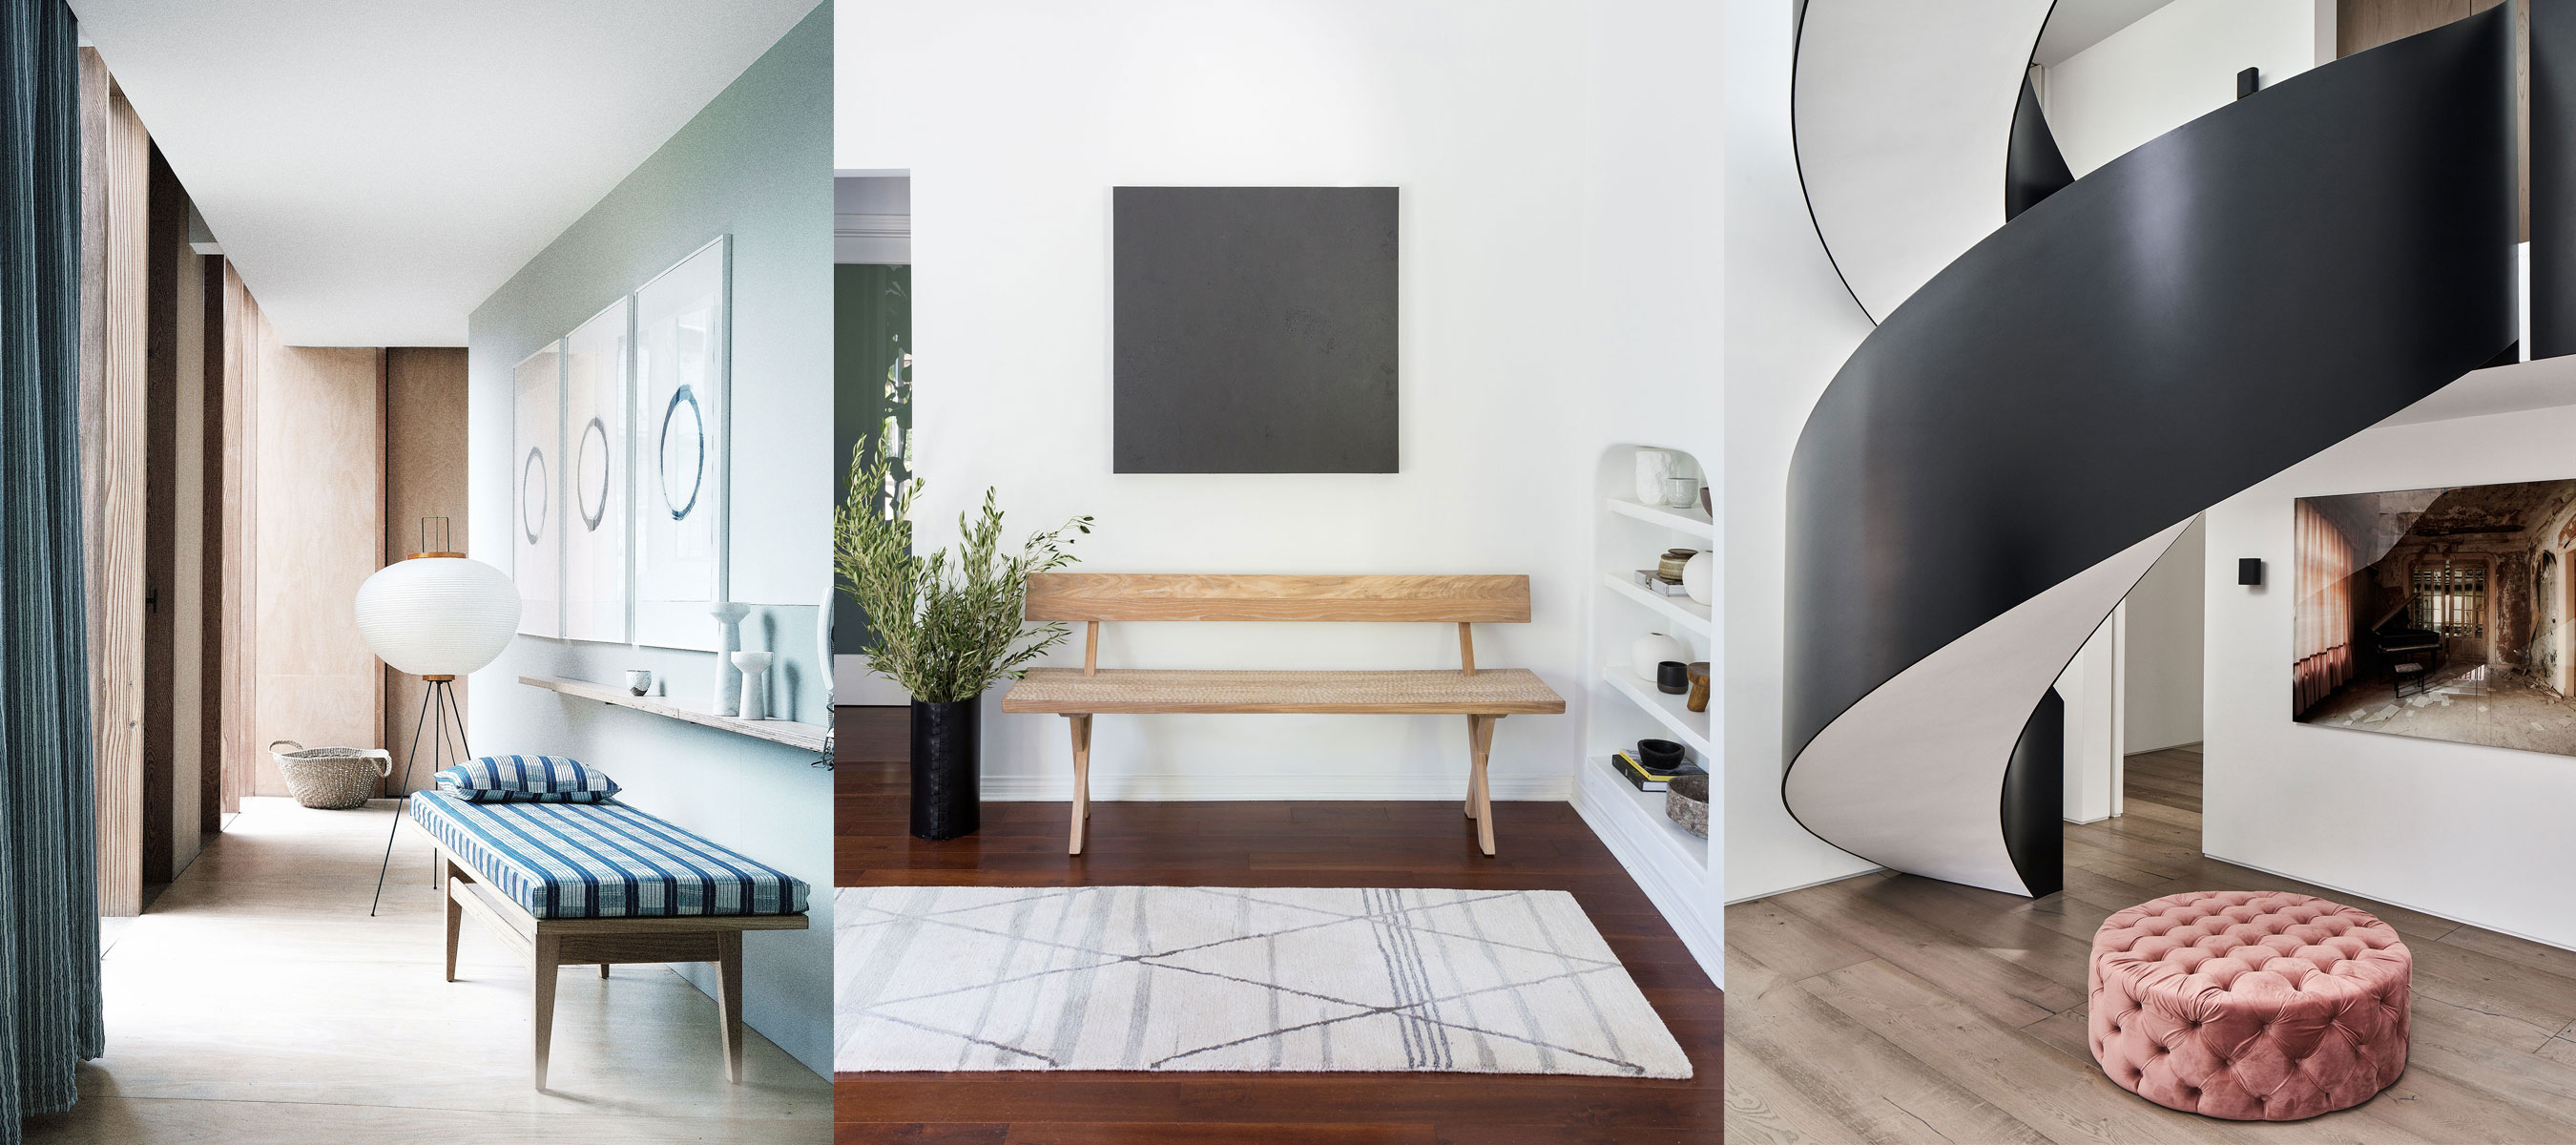 Modern Foyer Design Ideas For Your Home | Design Cafe